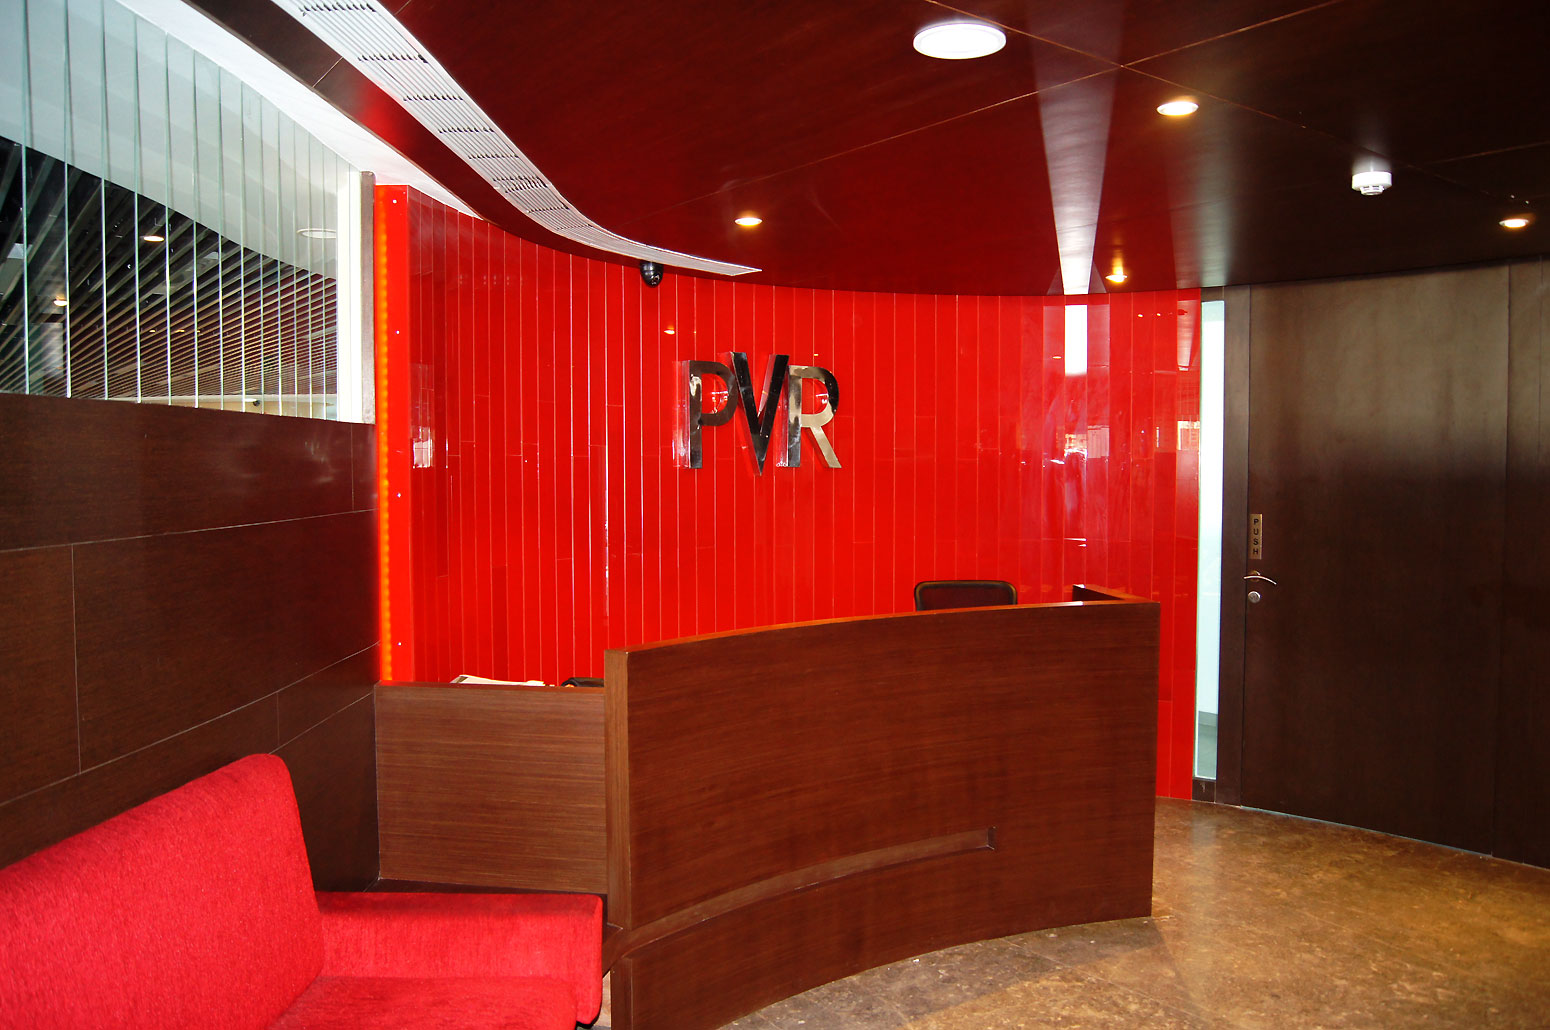 PVR Cinema Office